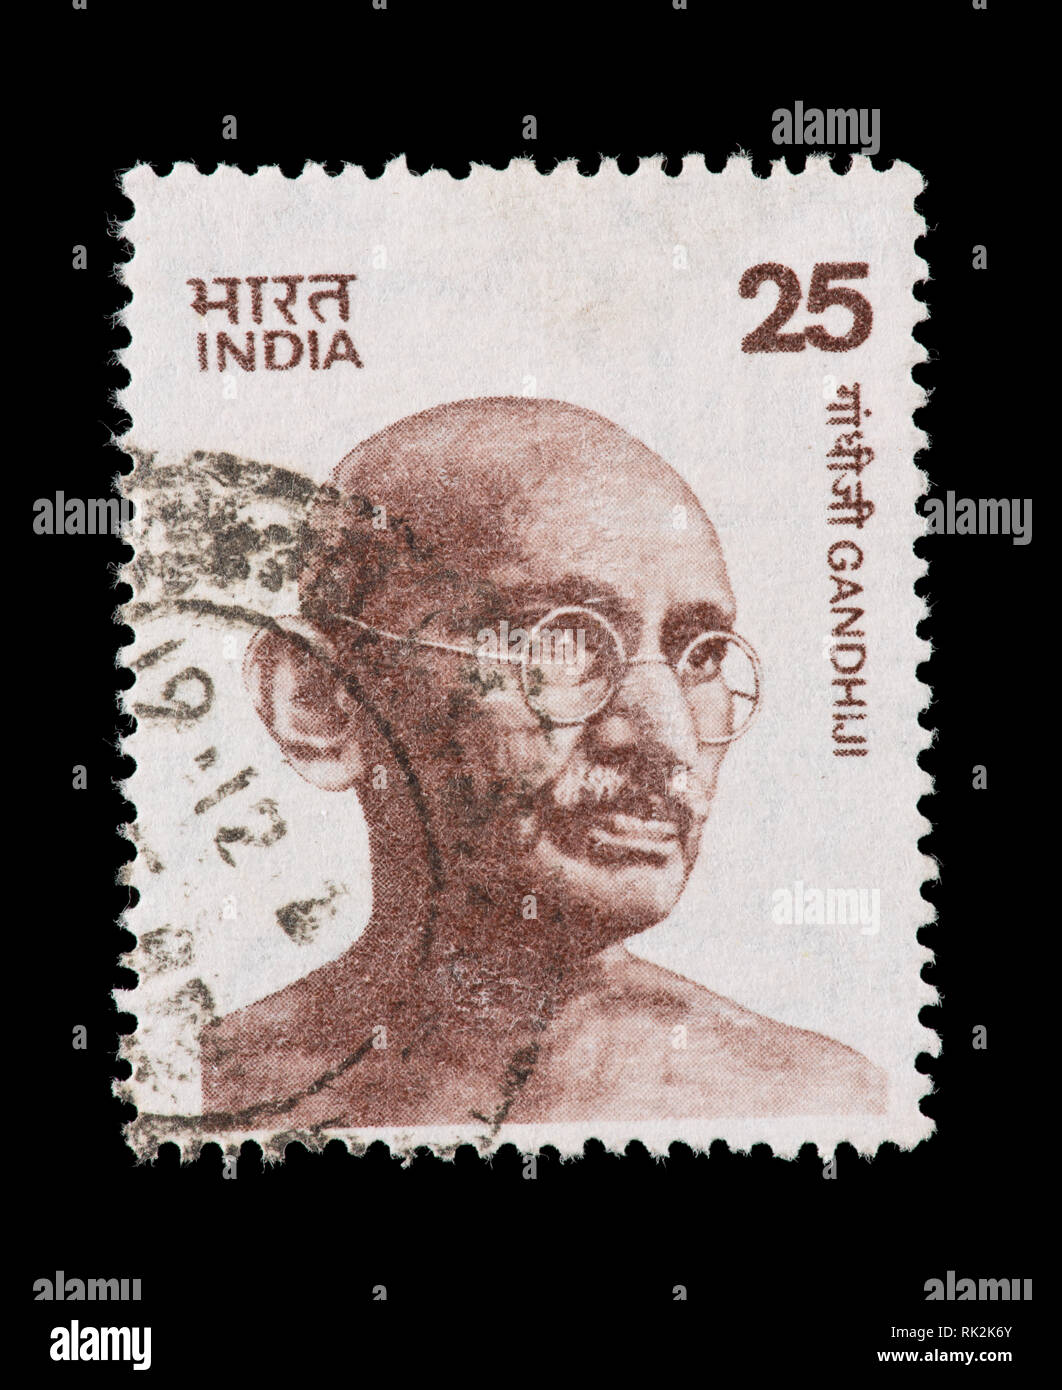 Postage stamp from Idnia depicting Mohandas Karamchand Gandhi Stock Photo